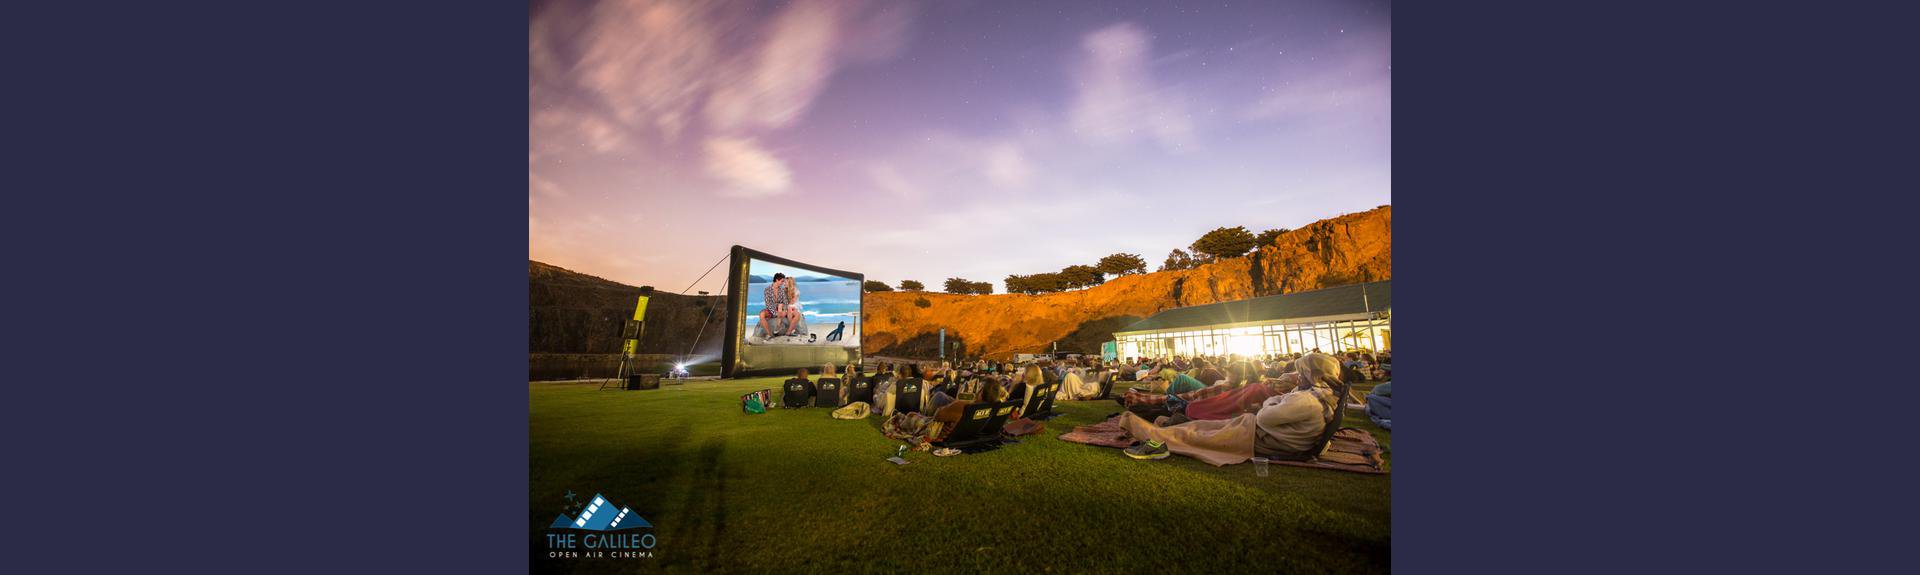 The Galileo Open Air Cinema